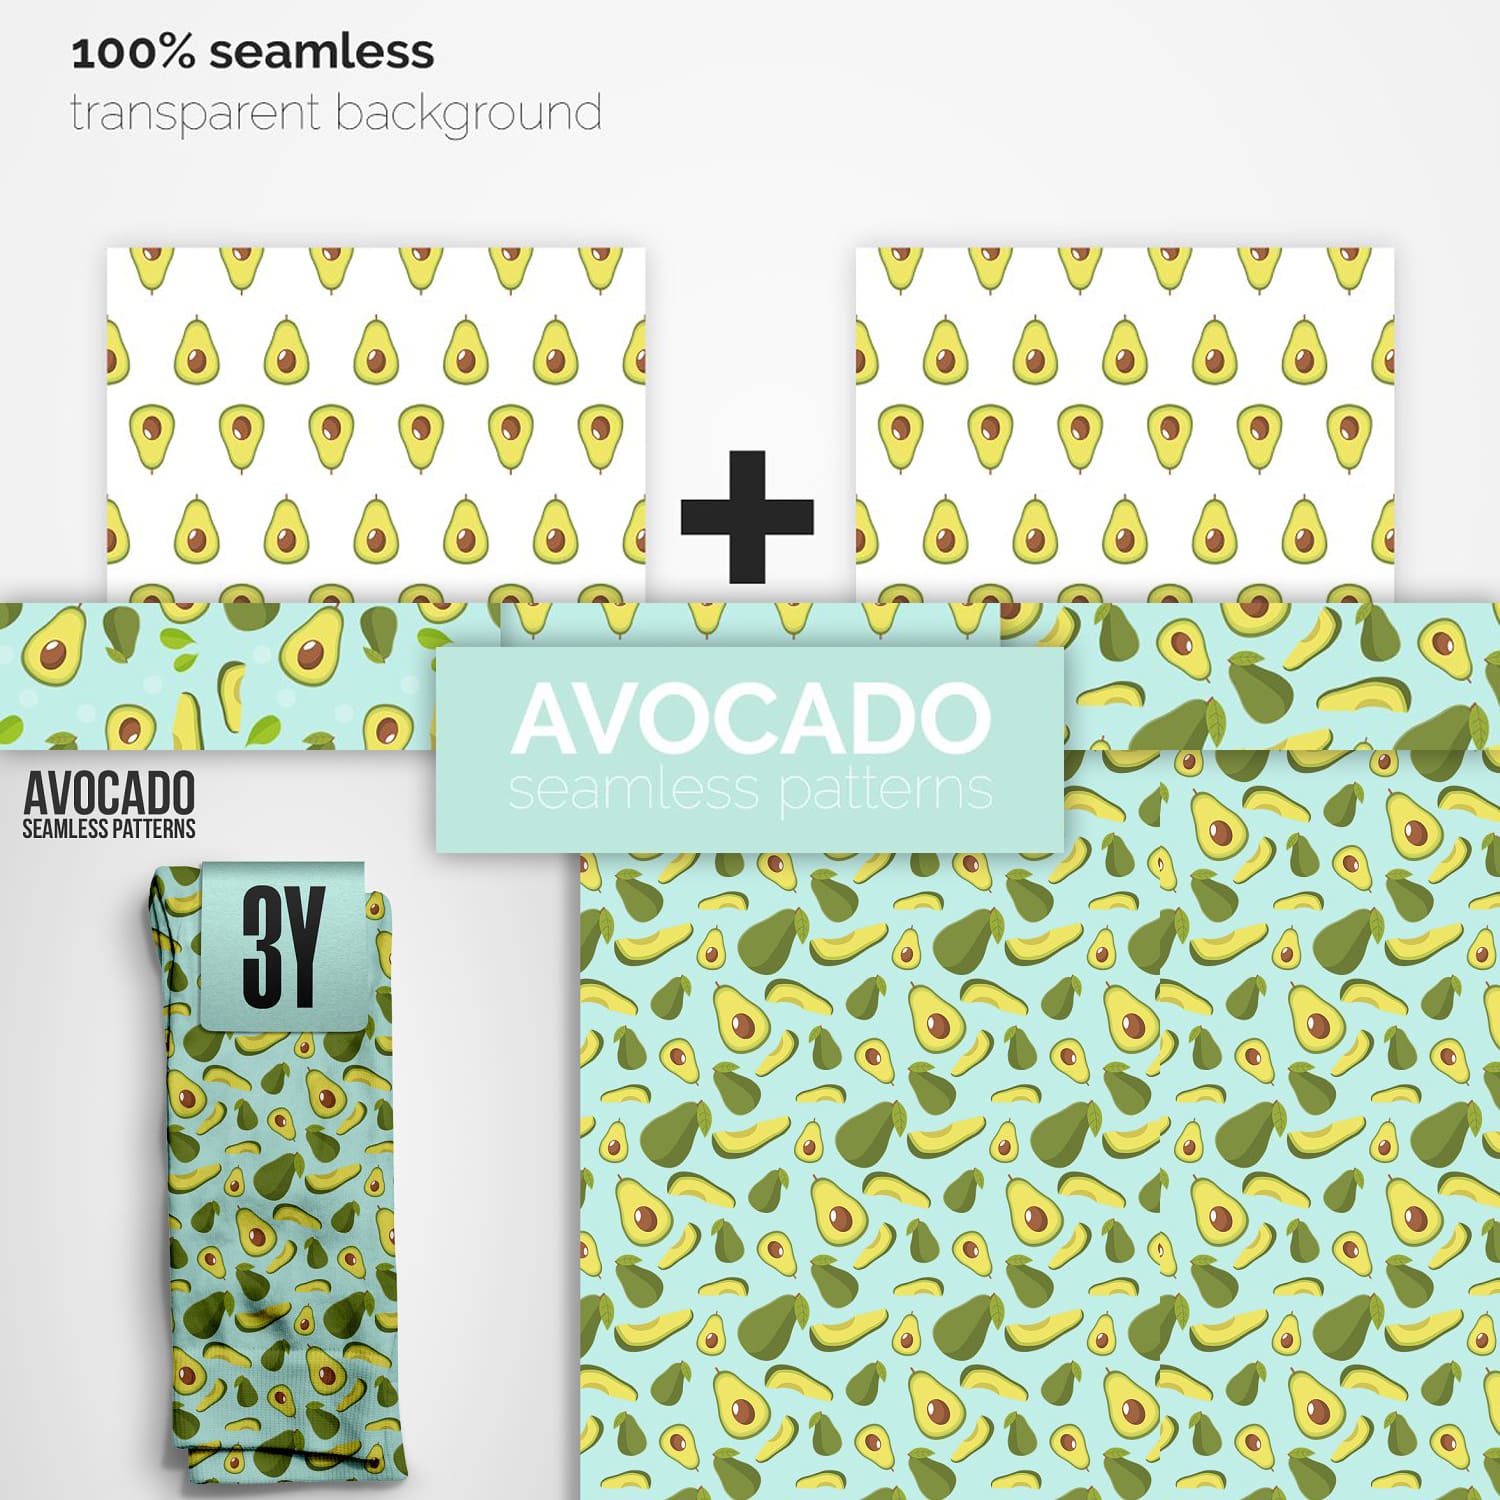 avocado seamless patterns design collection.